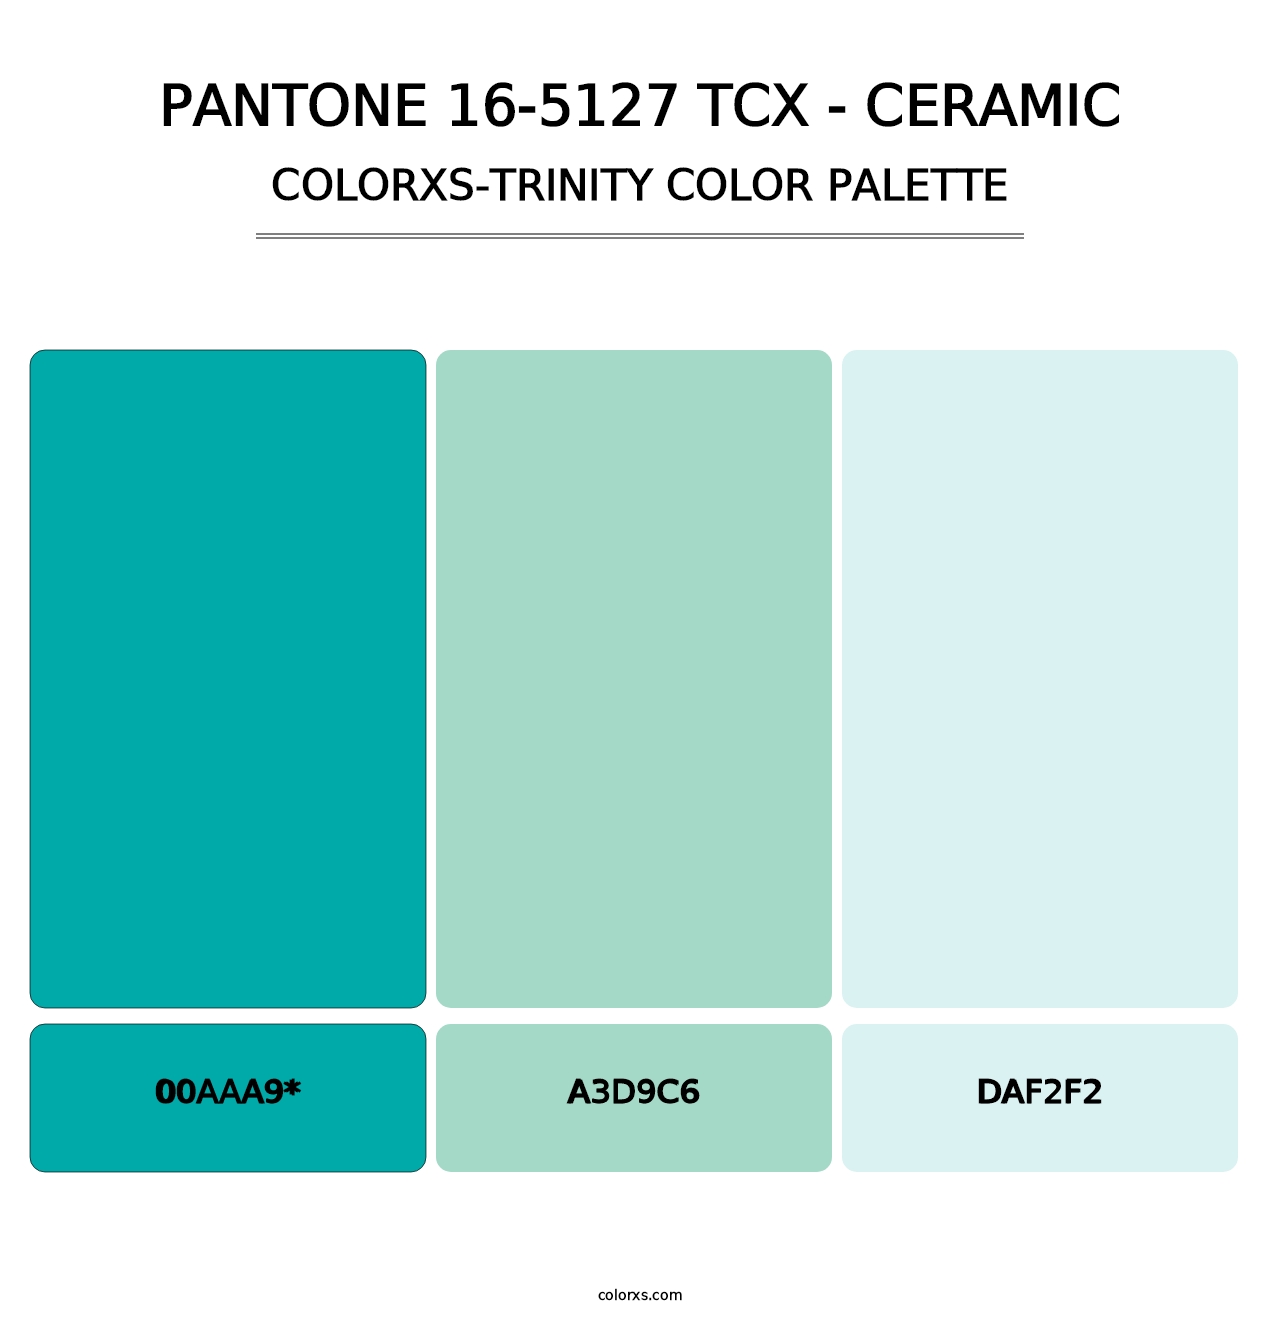 PANTONE 16-5127 TCX - Ceramic - Colorxs Trinity Palette